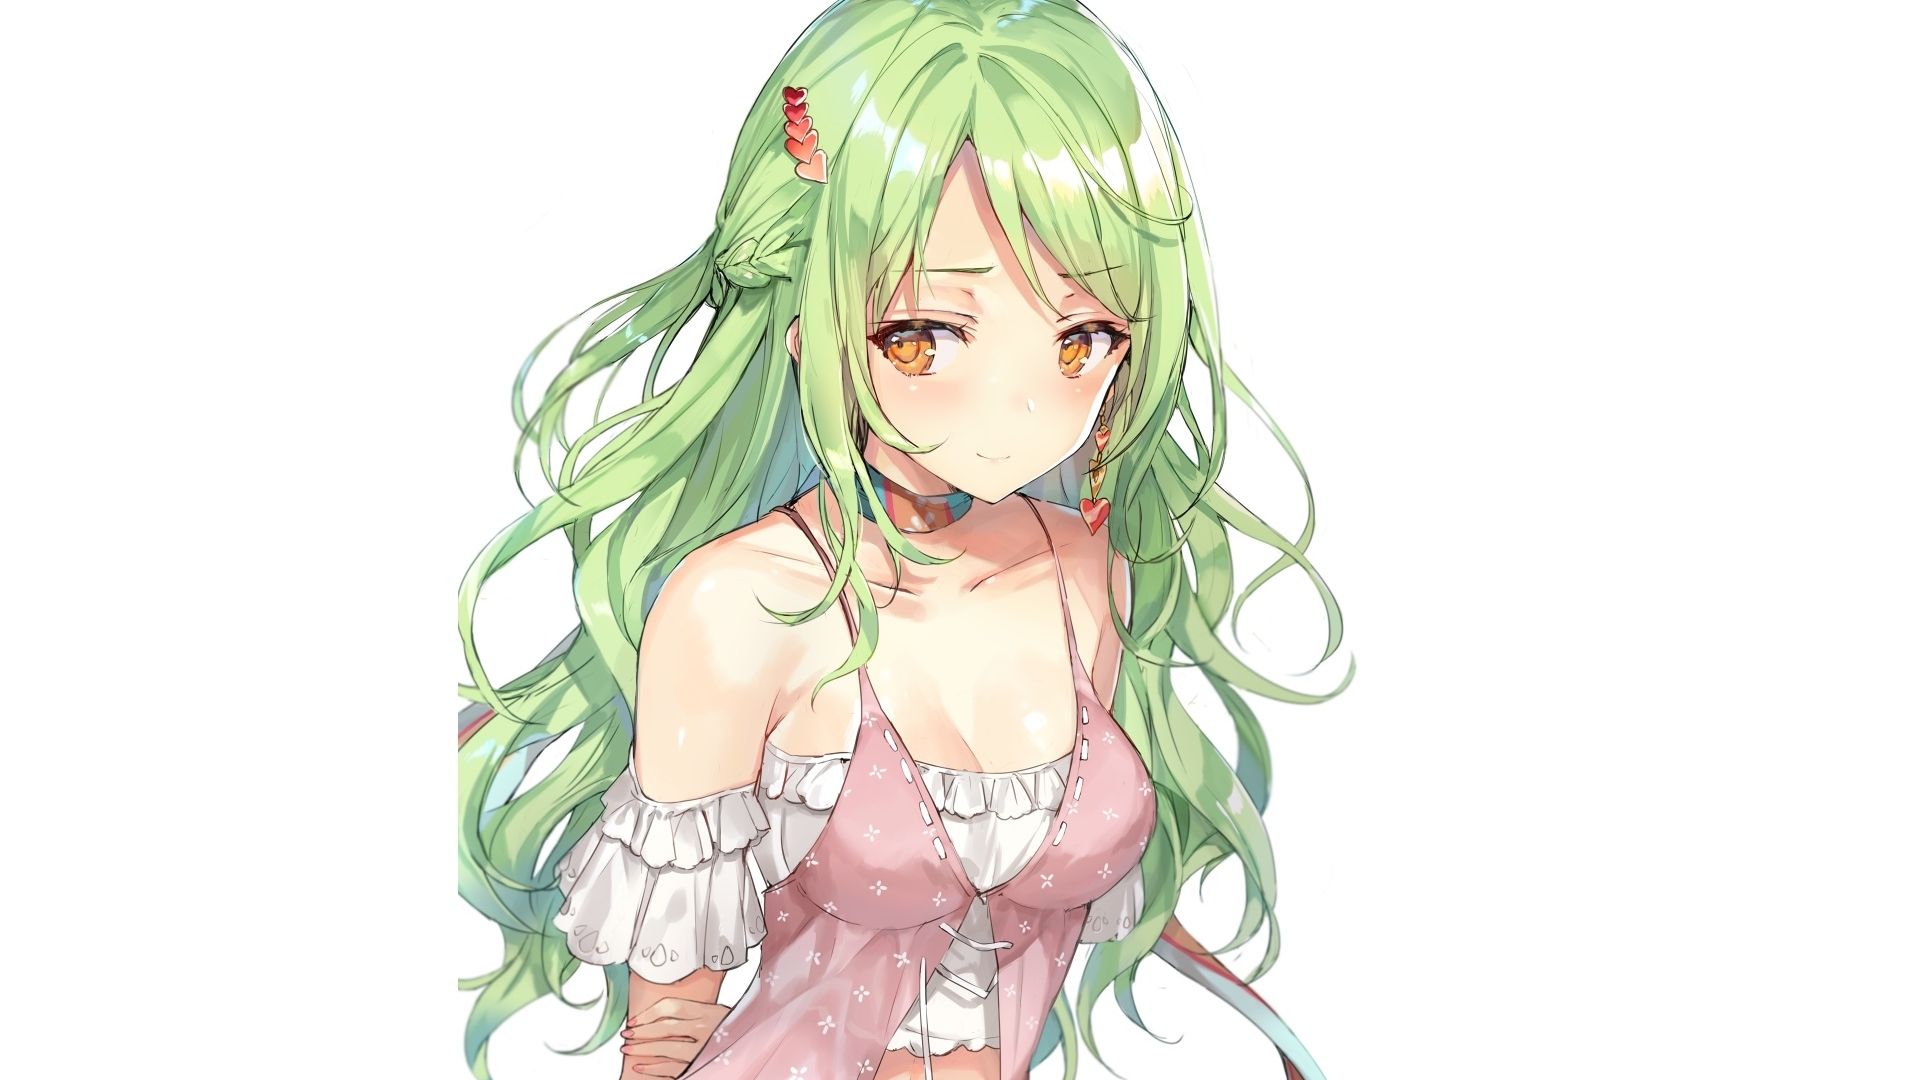 Desktop wallpapers beautiful, green hair, anime girl, original, hd image, picture, background, 6df4b7